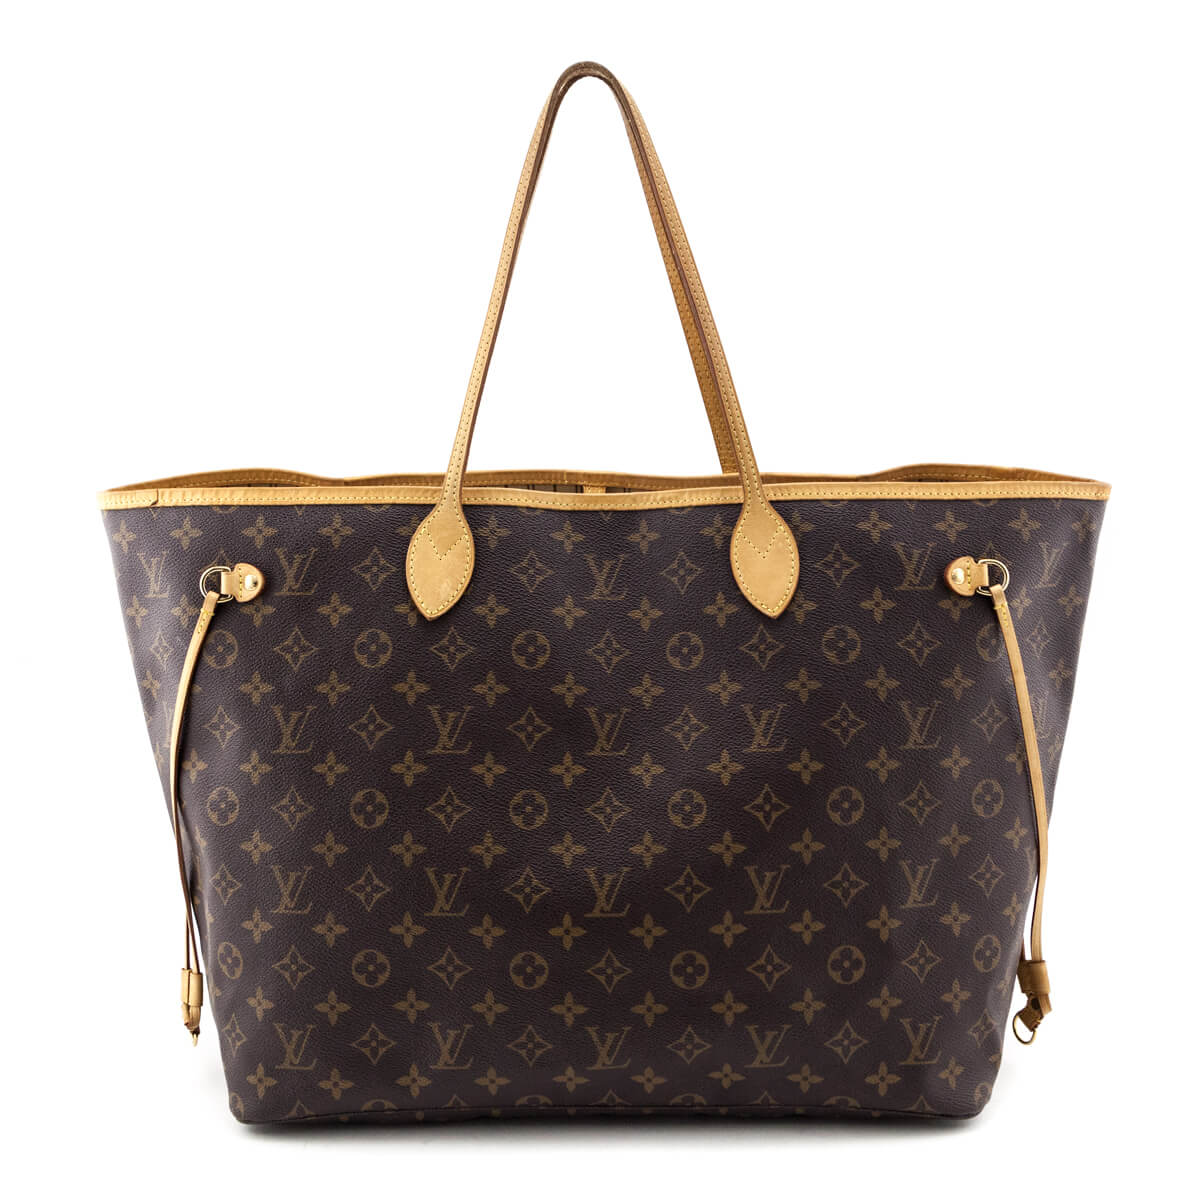 The Handbag Agent – Buy, Sell and Rent Luxury Handbags